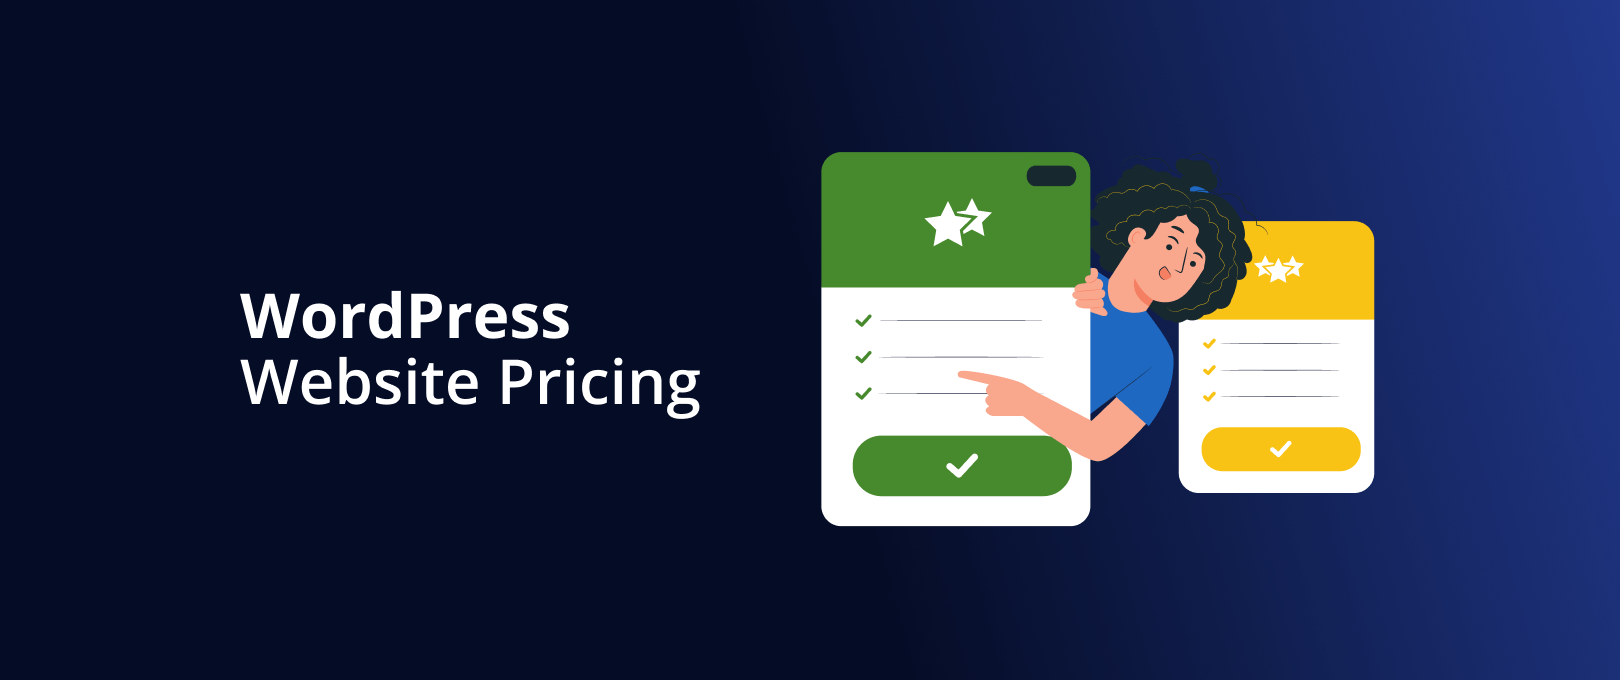 WordPress Website Pricing